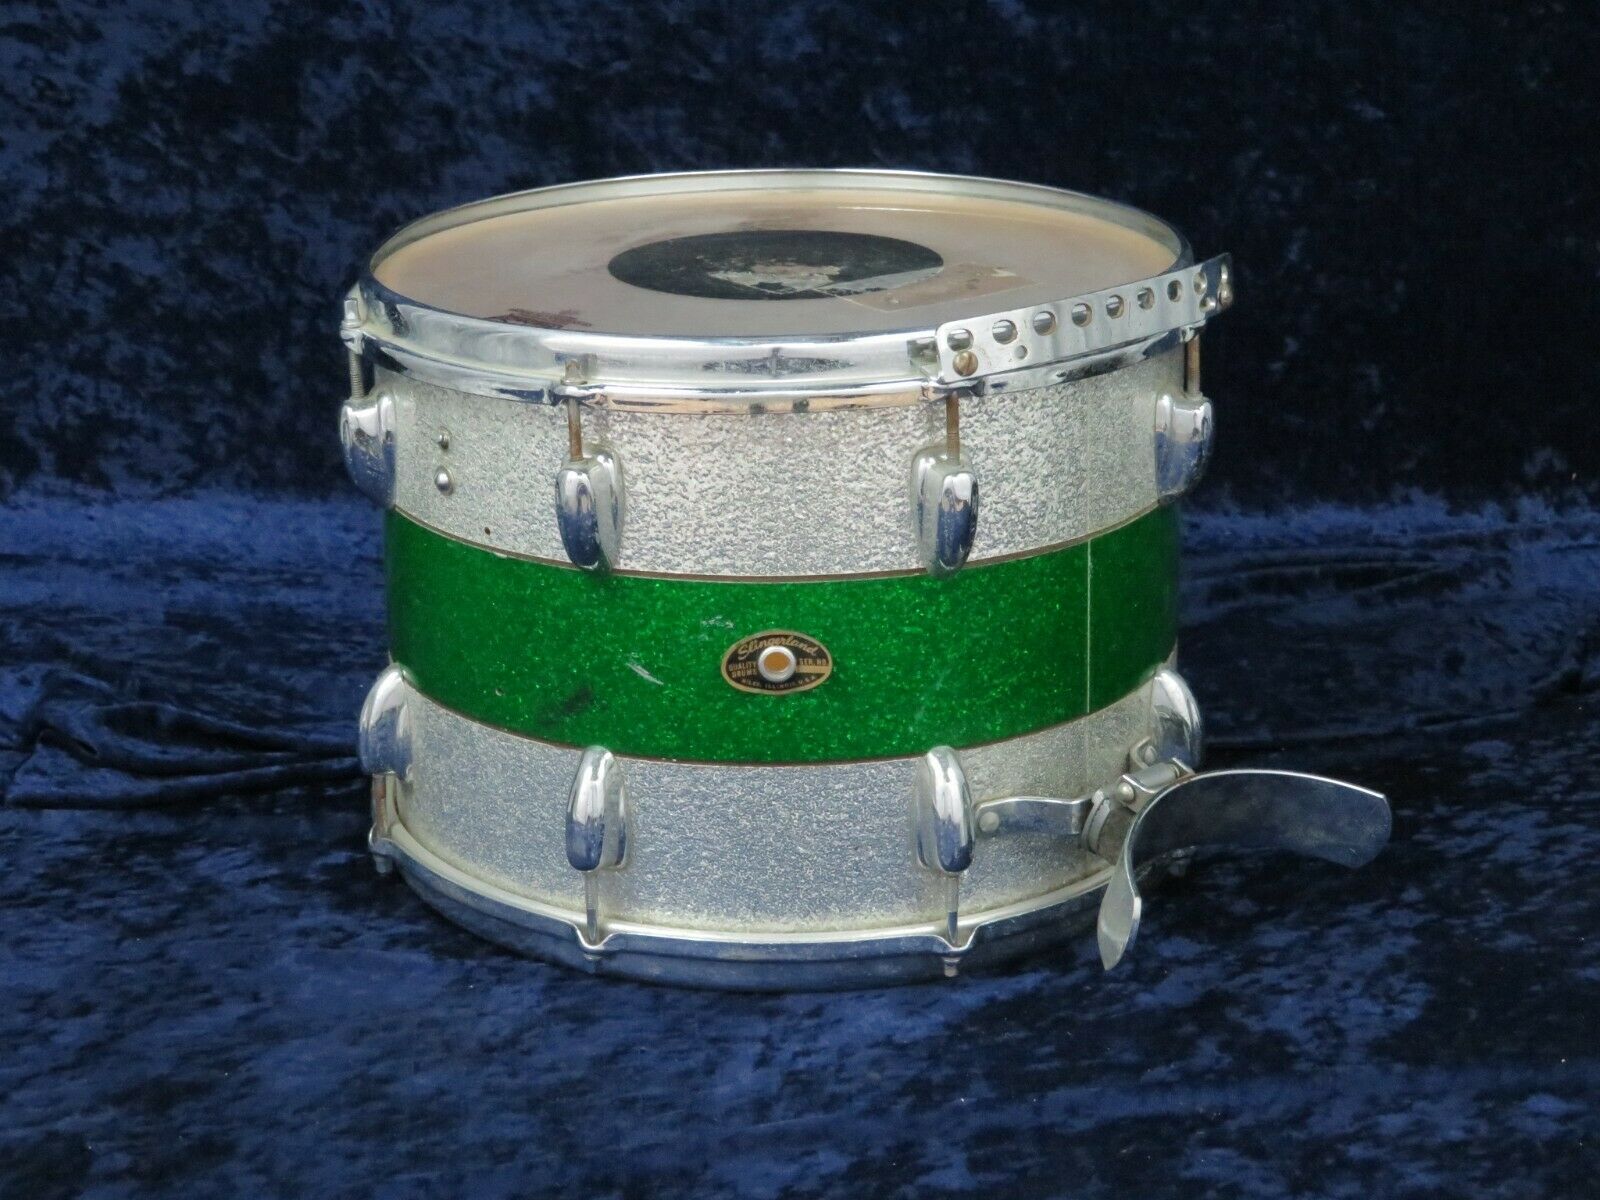 Slingerland Black & Gold Niles 10x14 Tenor Drum Ser#16861 Green & Silver Sparkle